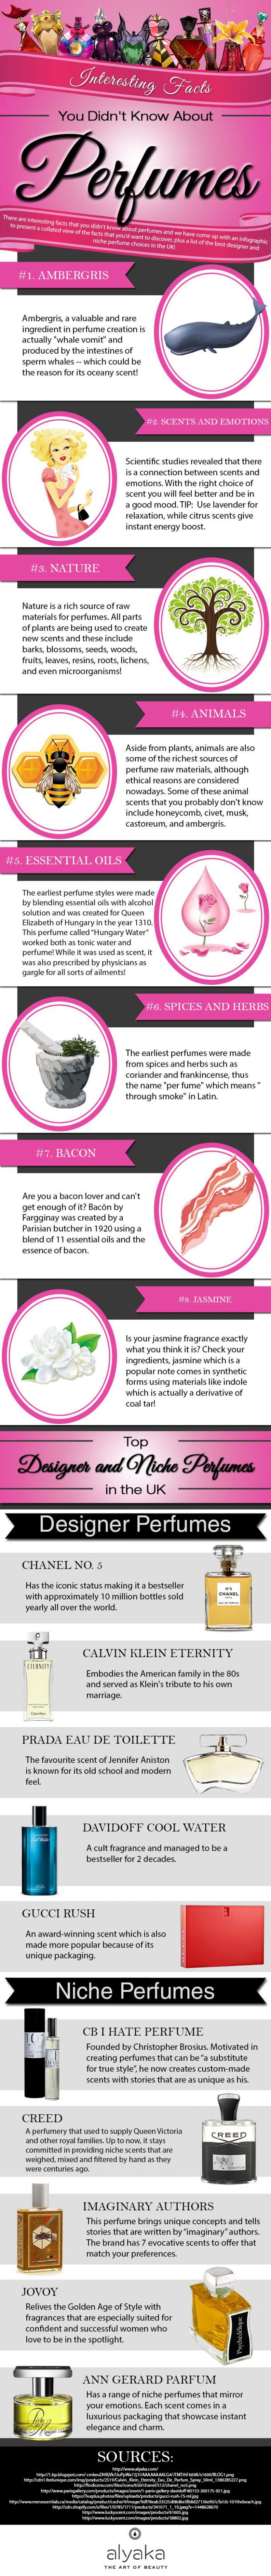 Interesting Perfume Facts